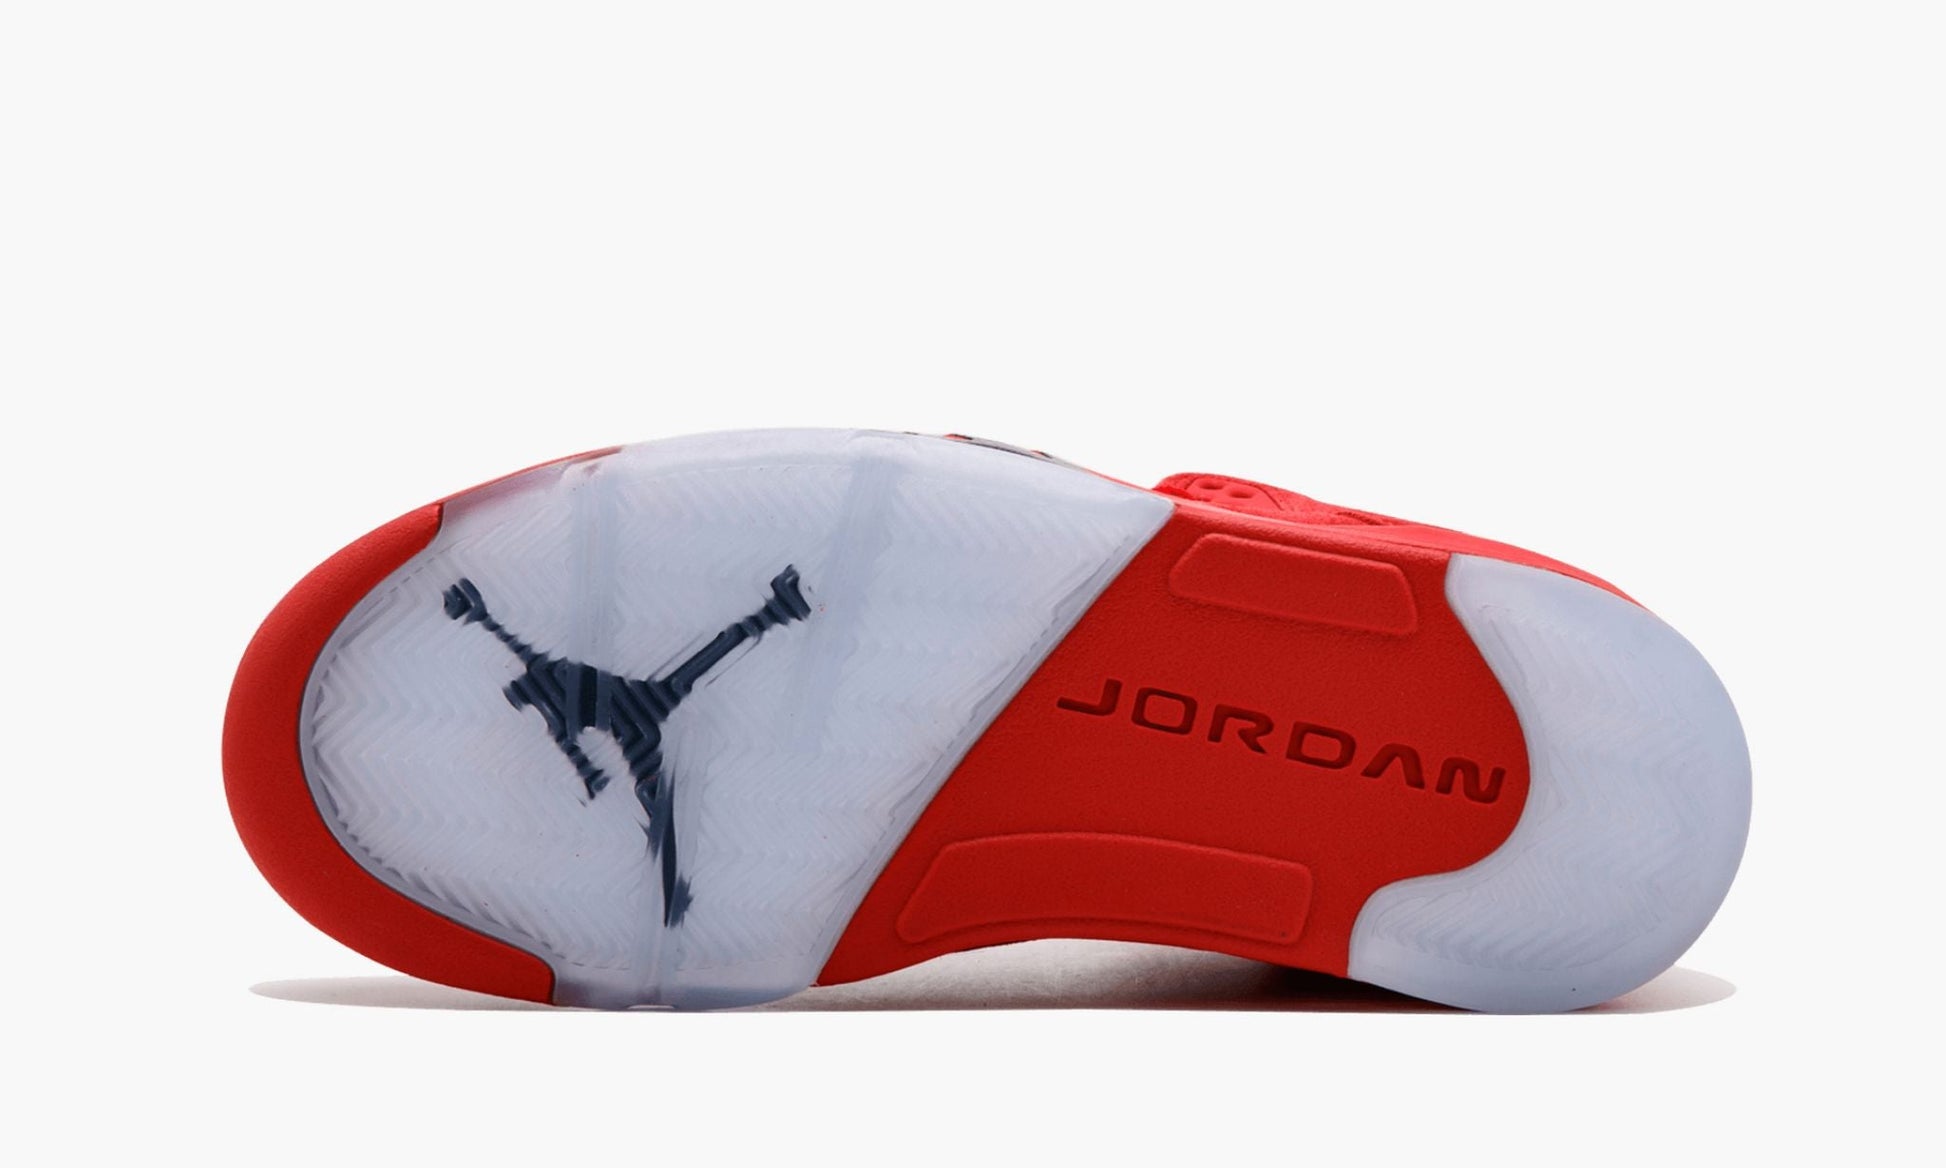 Air Jordan 5 Retro "Red Suede"